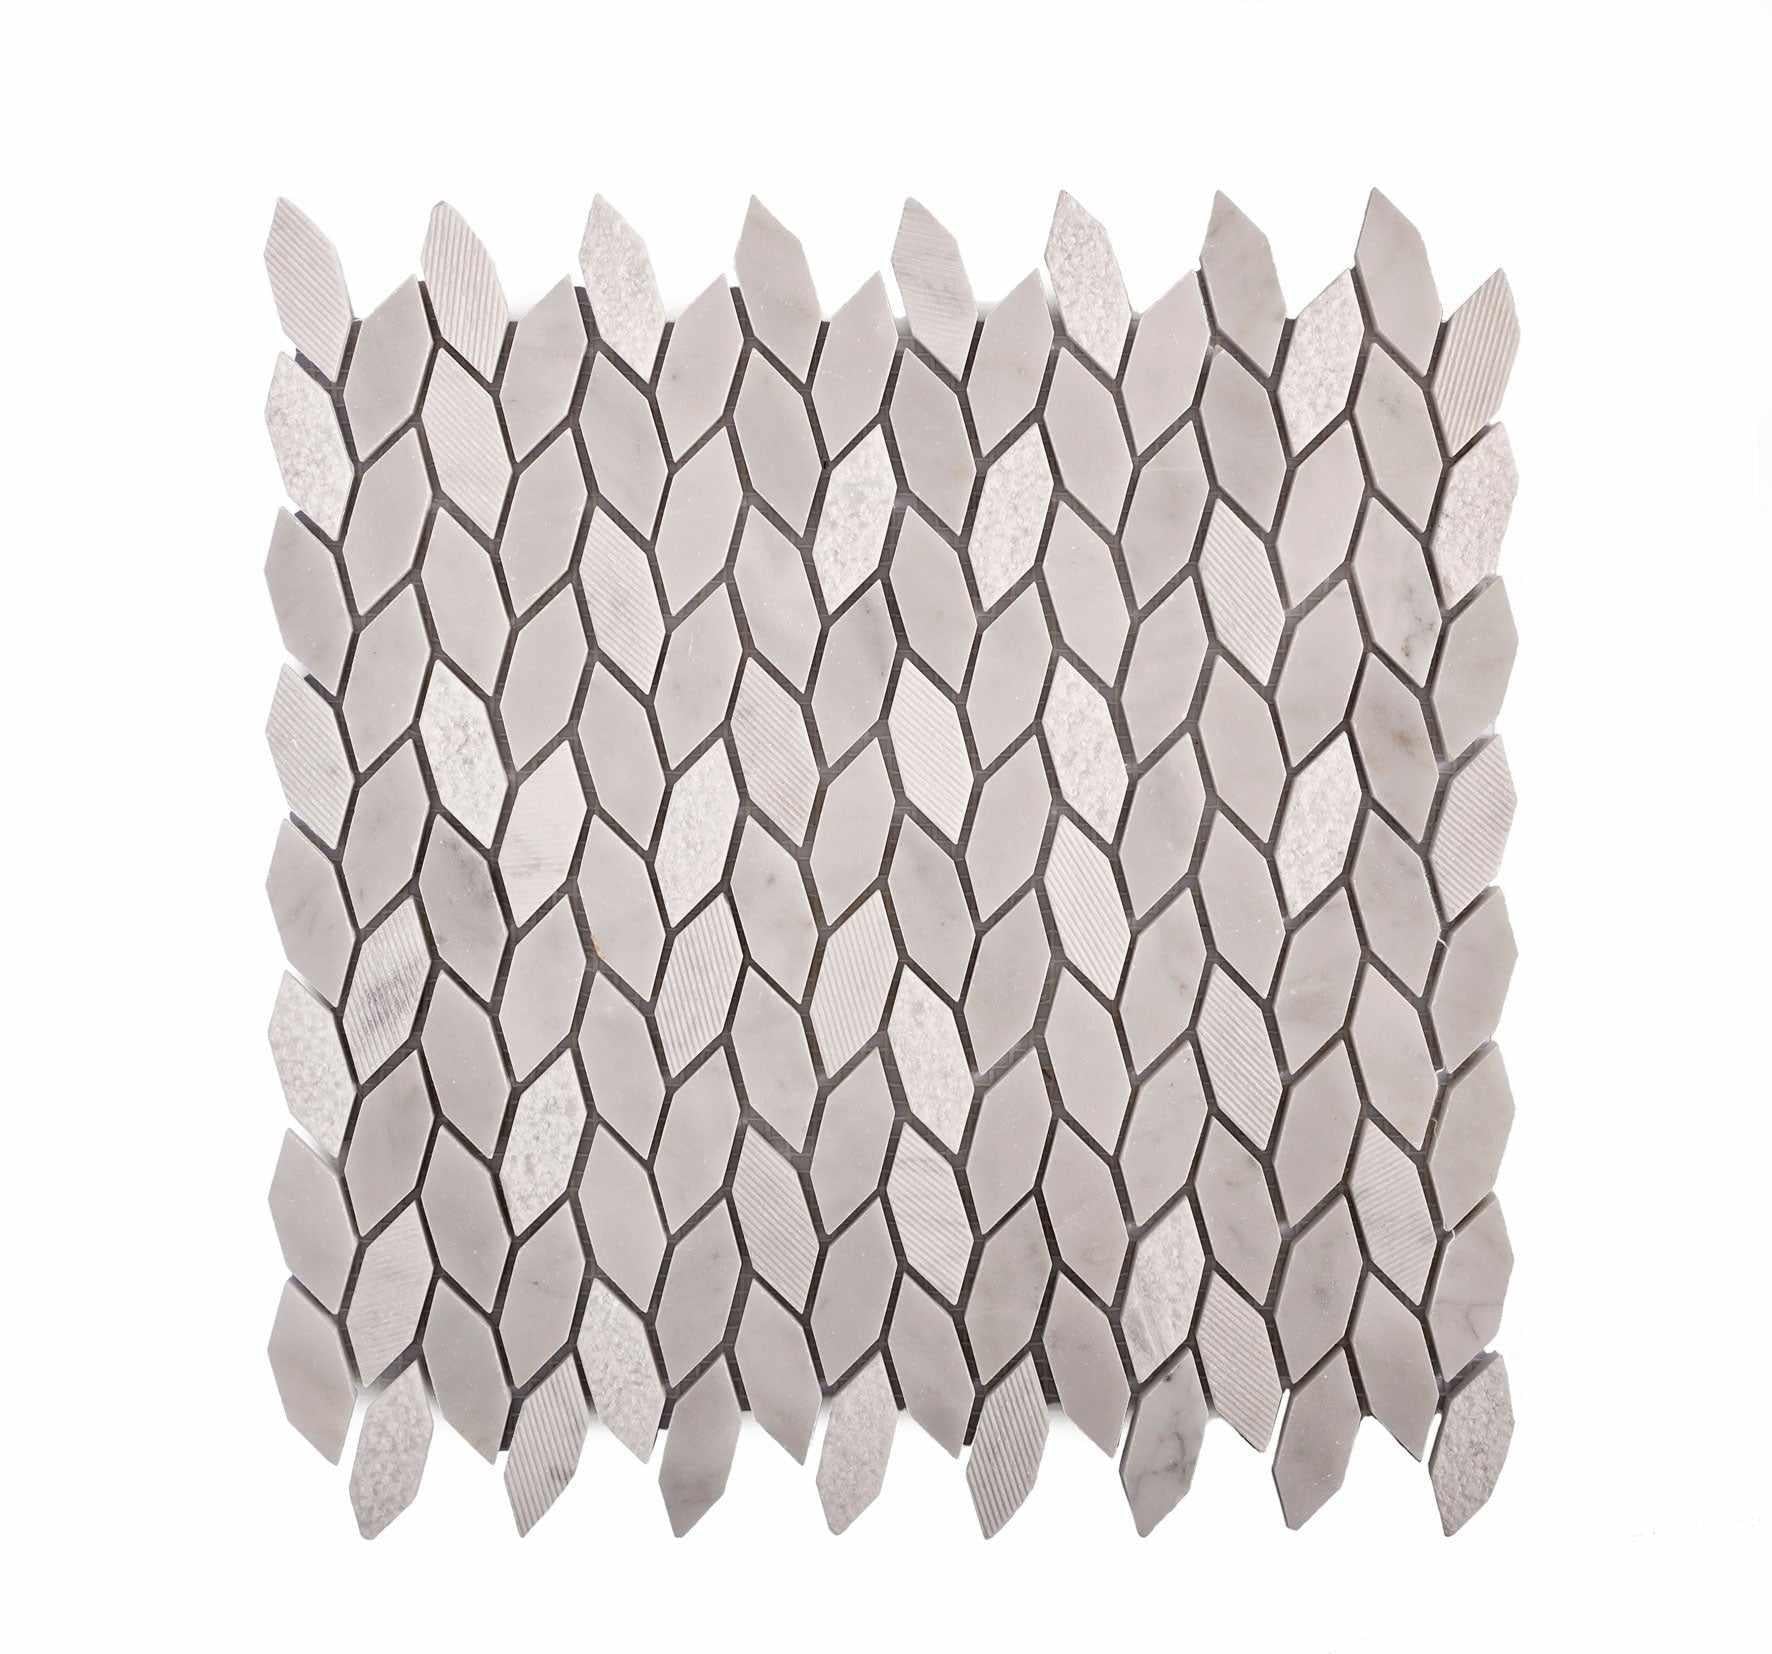 Textured Carrara Leaf Marble Mosaic Tile Sample